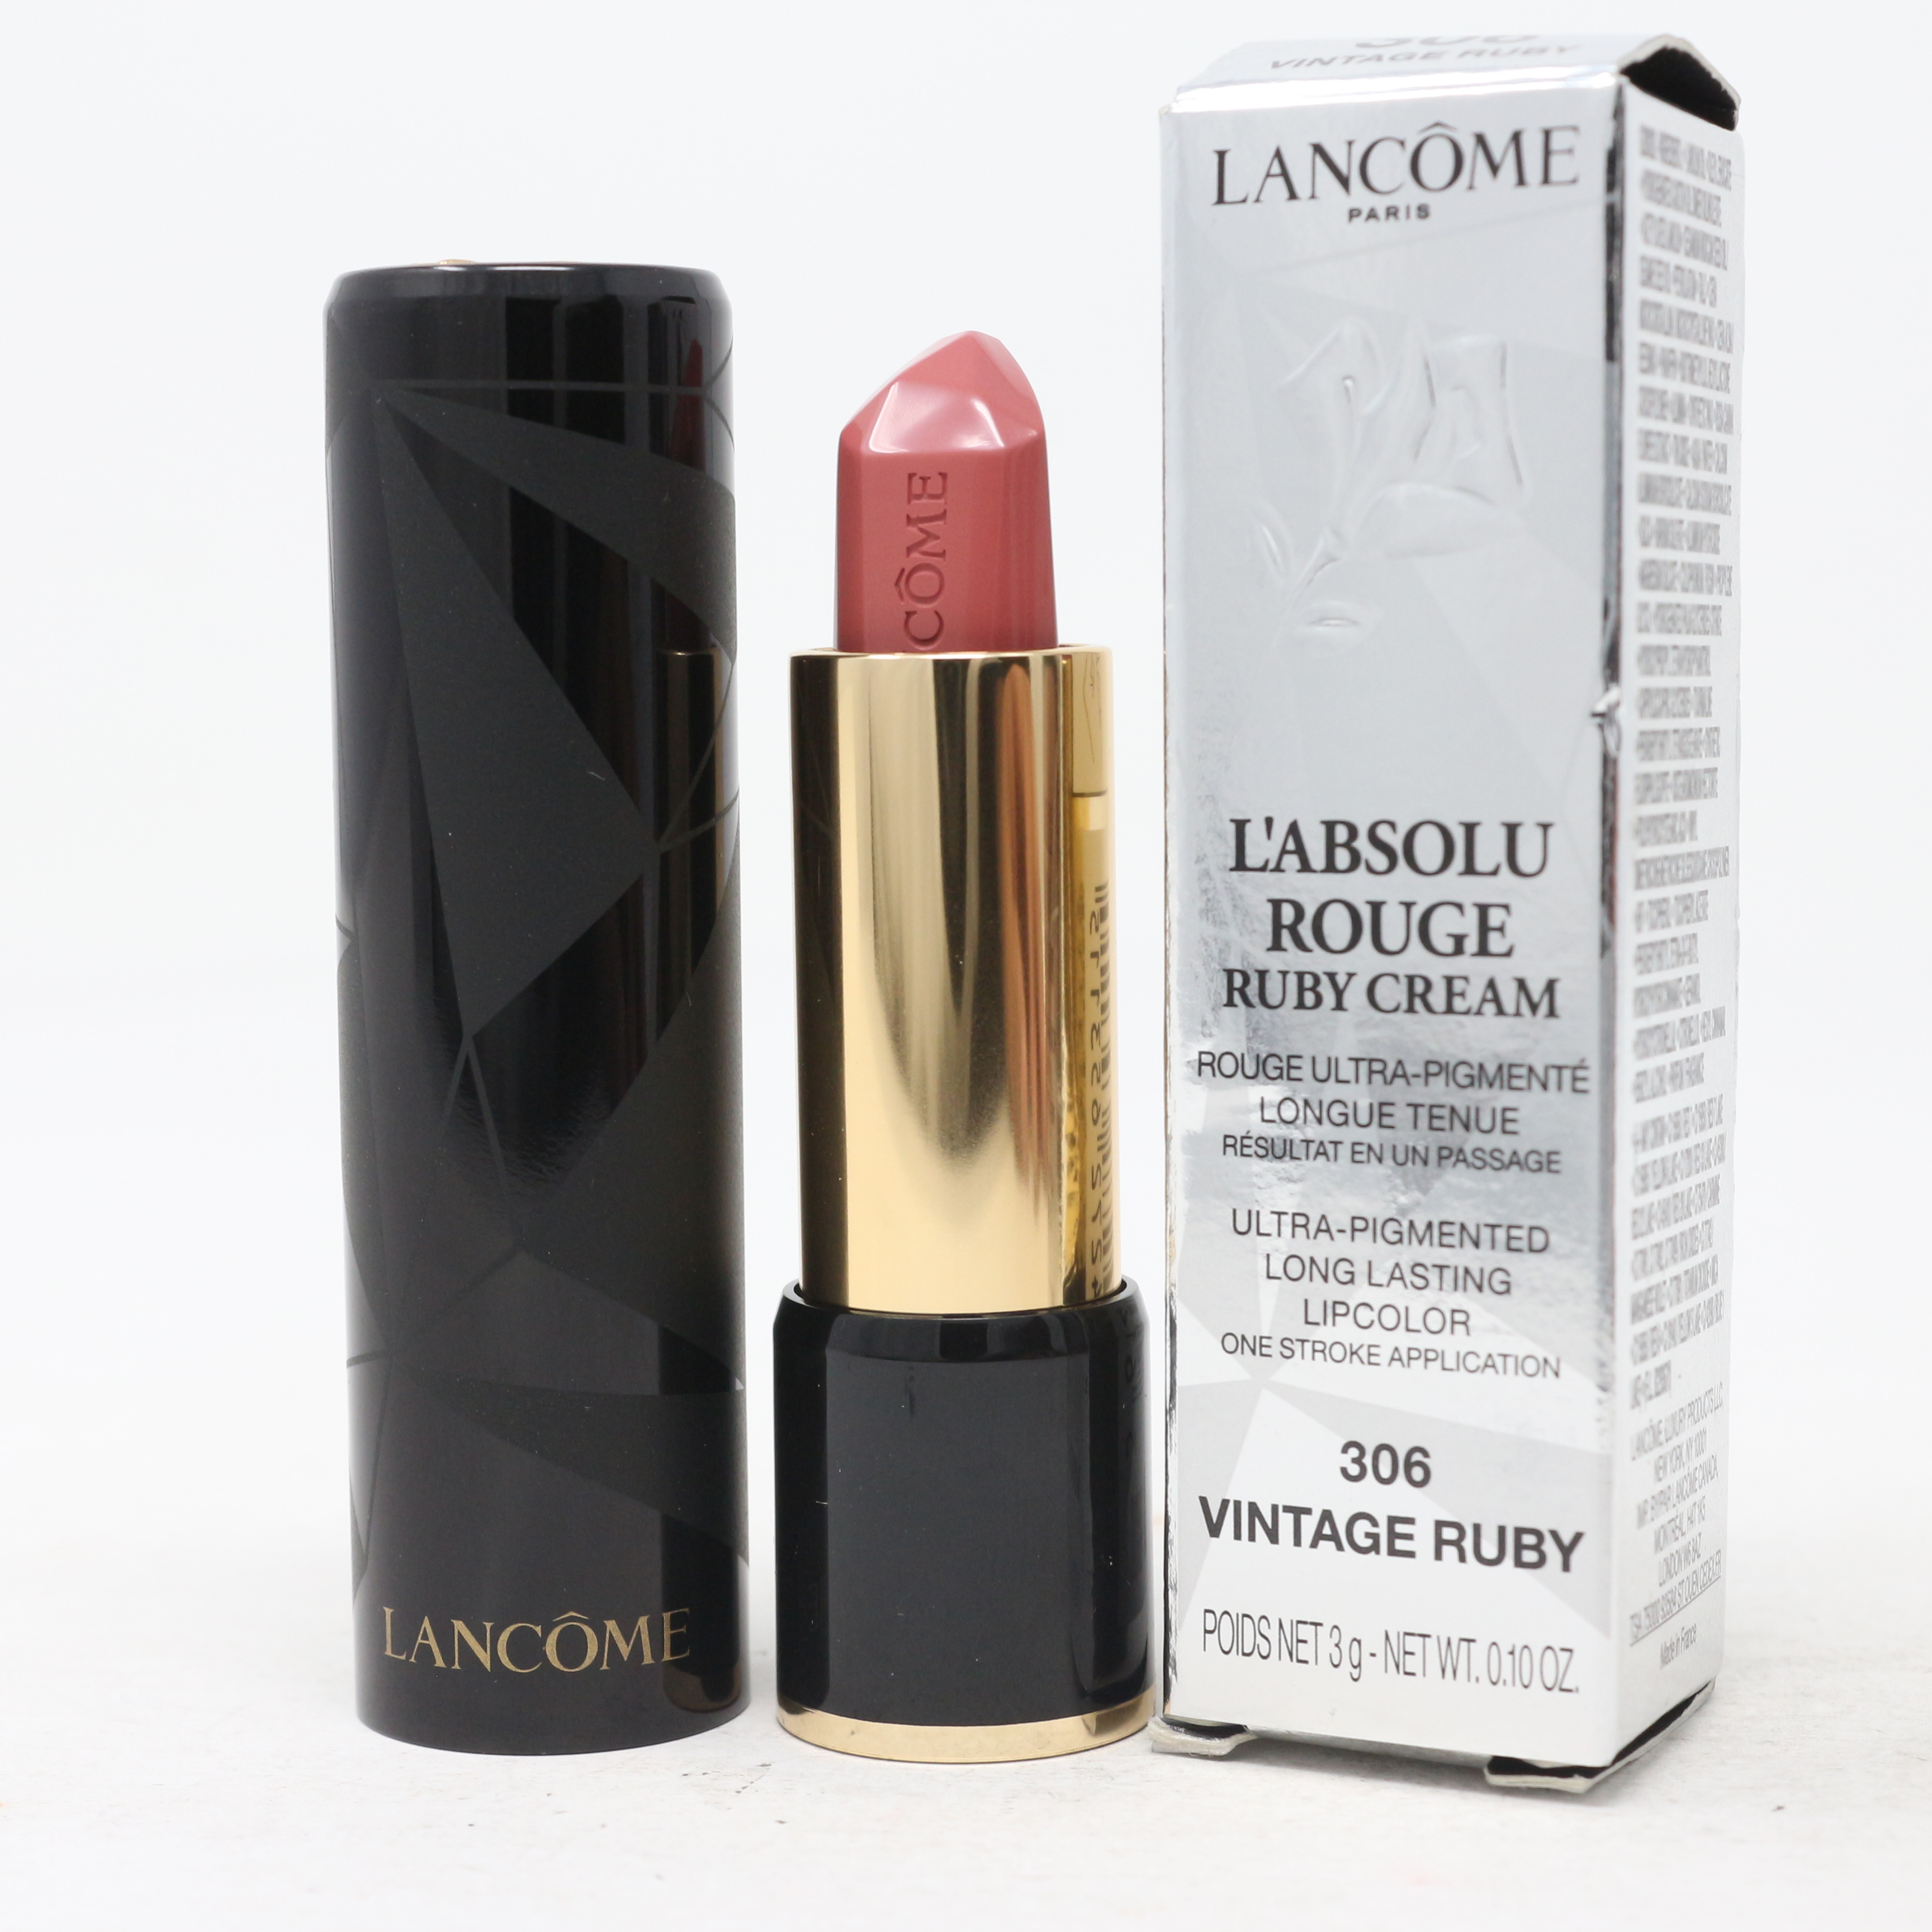 Lancome L Absolu Rouge Ruby Cream Lipstick 0 10oz 3g New With Box Ebay